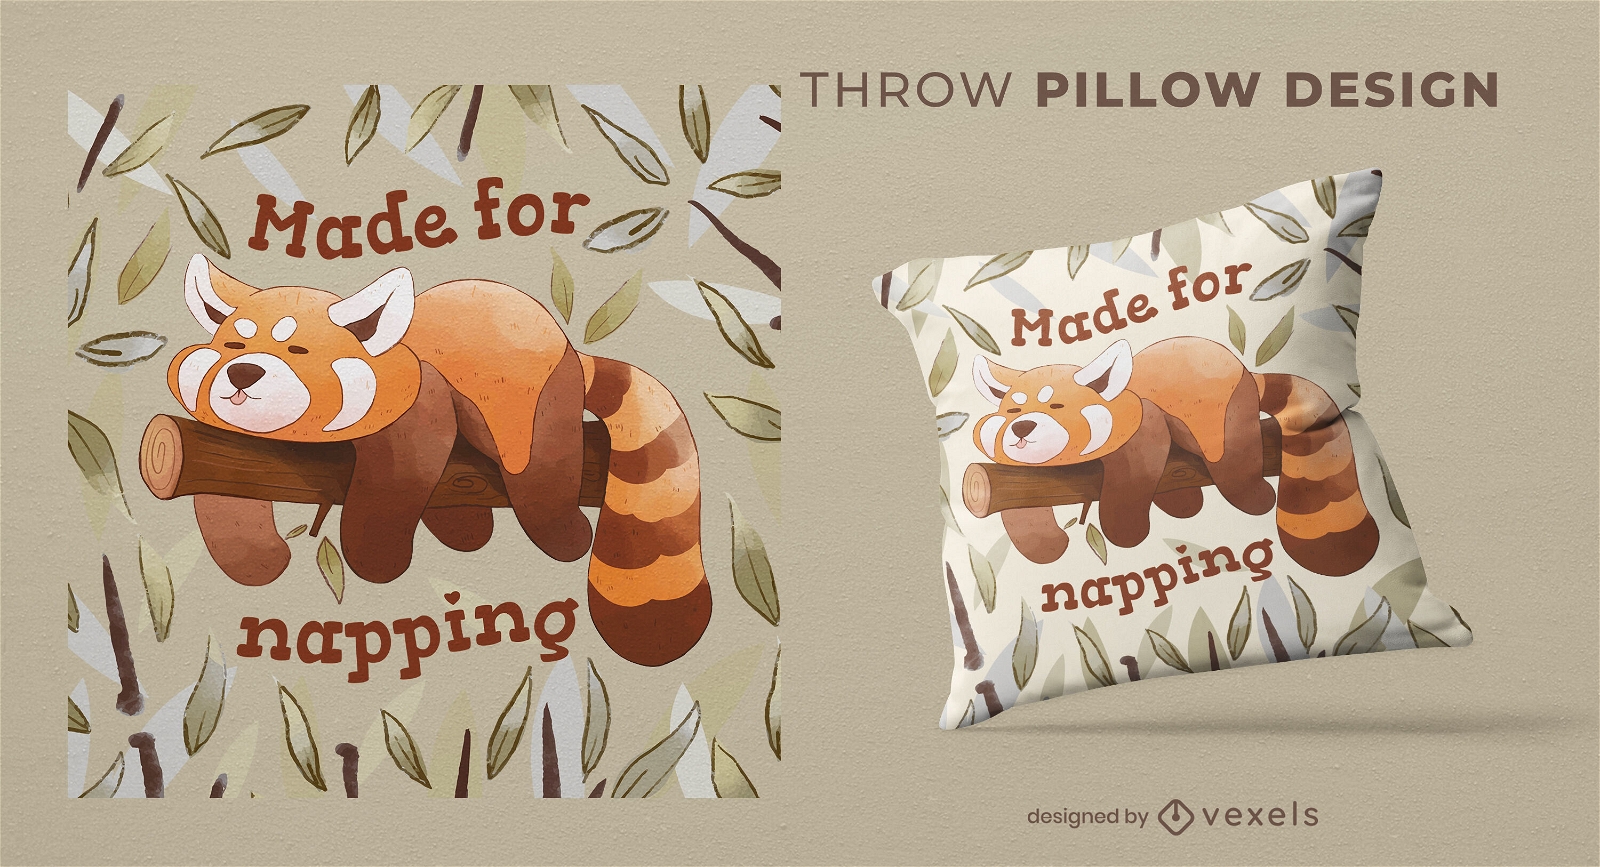 Red panda sleeping throw pillow design